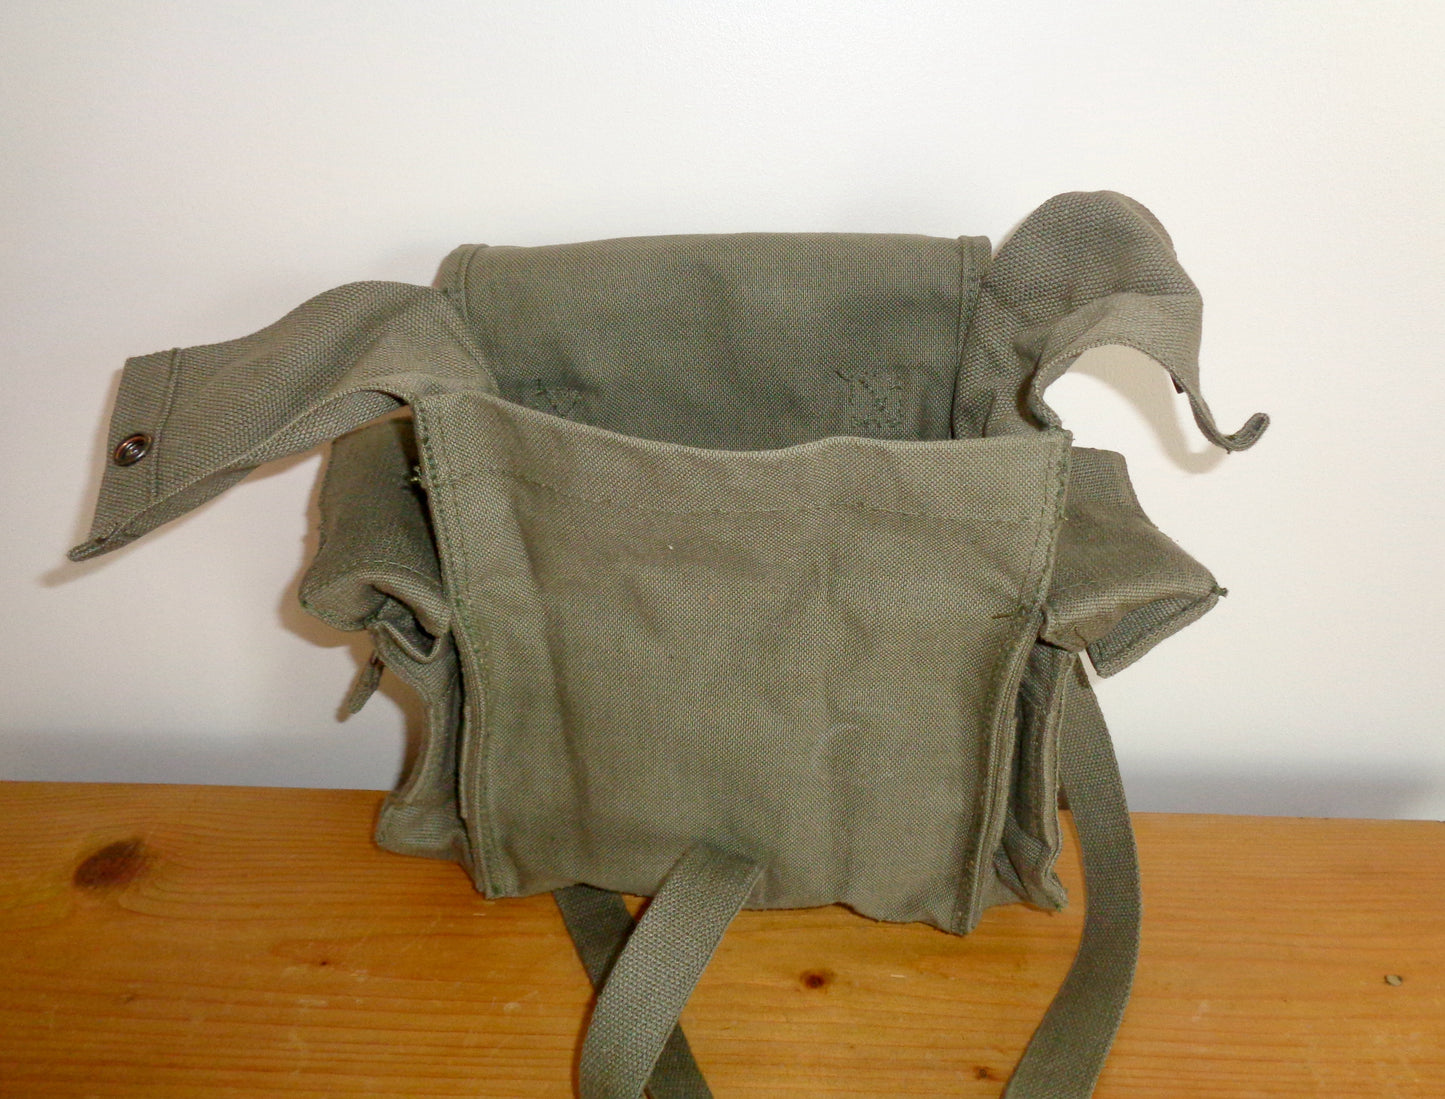 Vintage Military Canvas Shoulder Bag in Khaki Green With Side Pockets